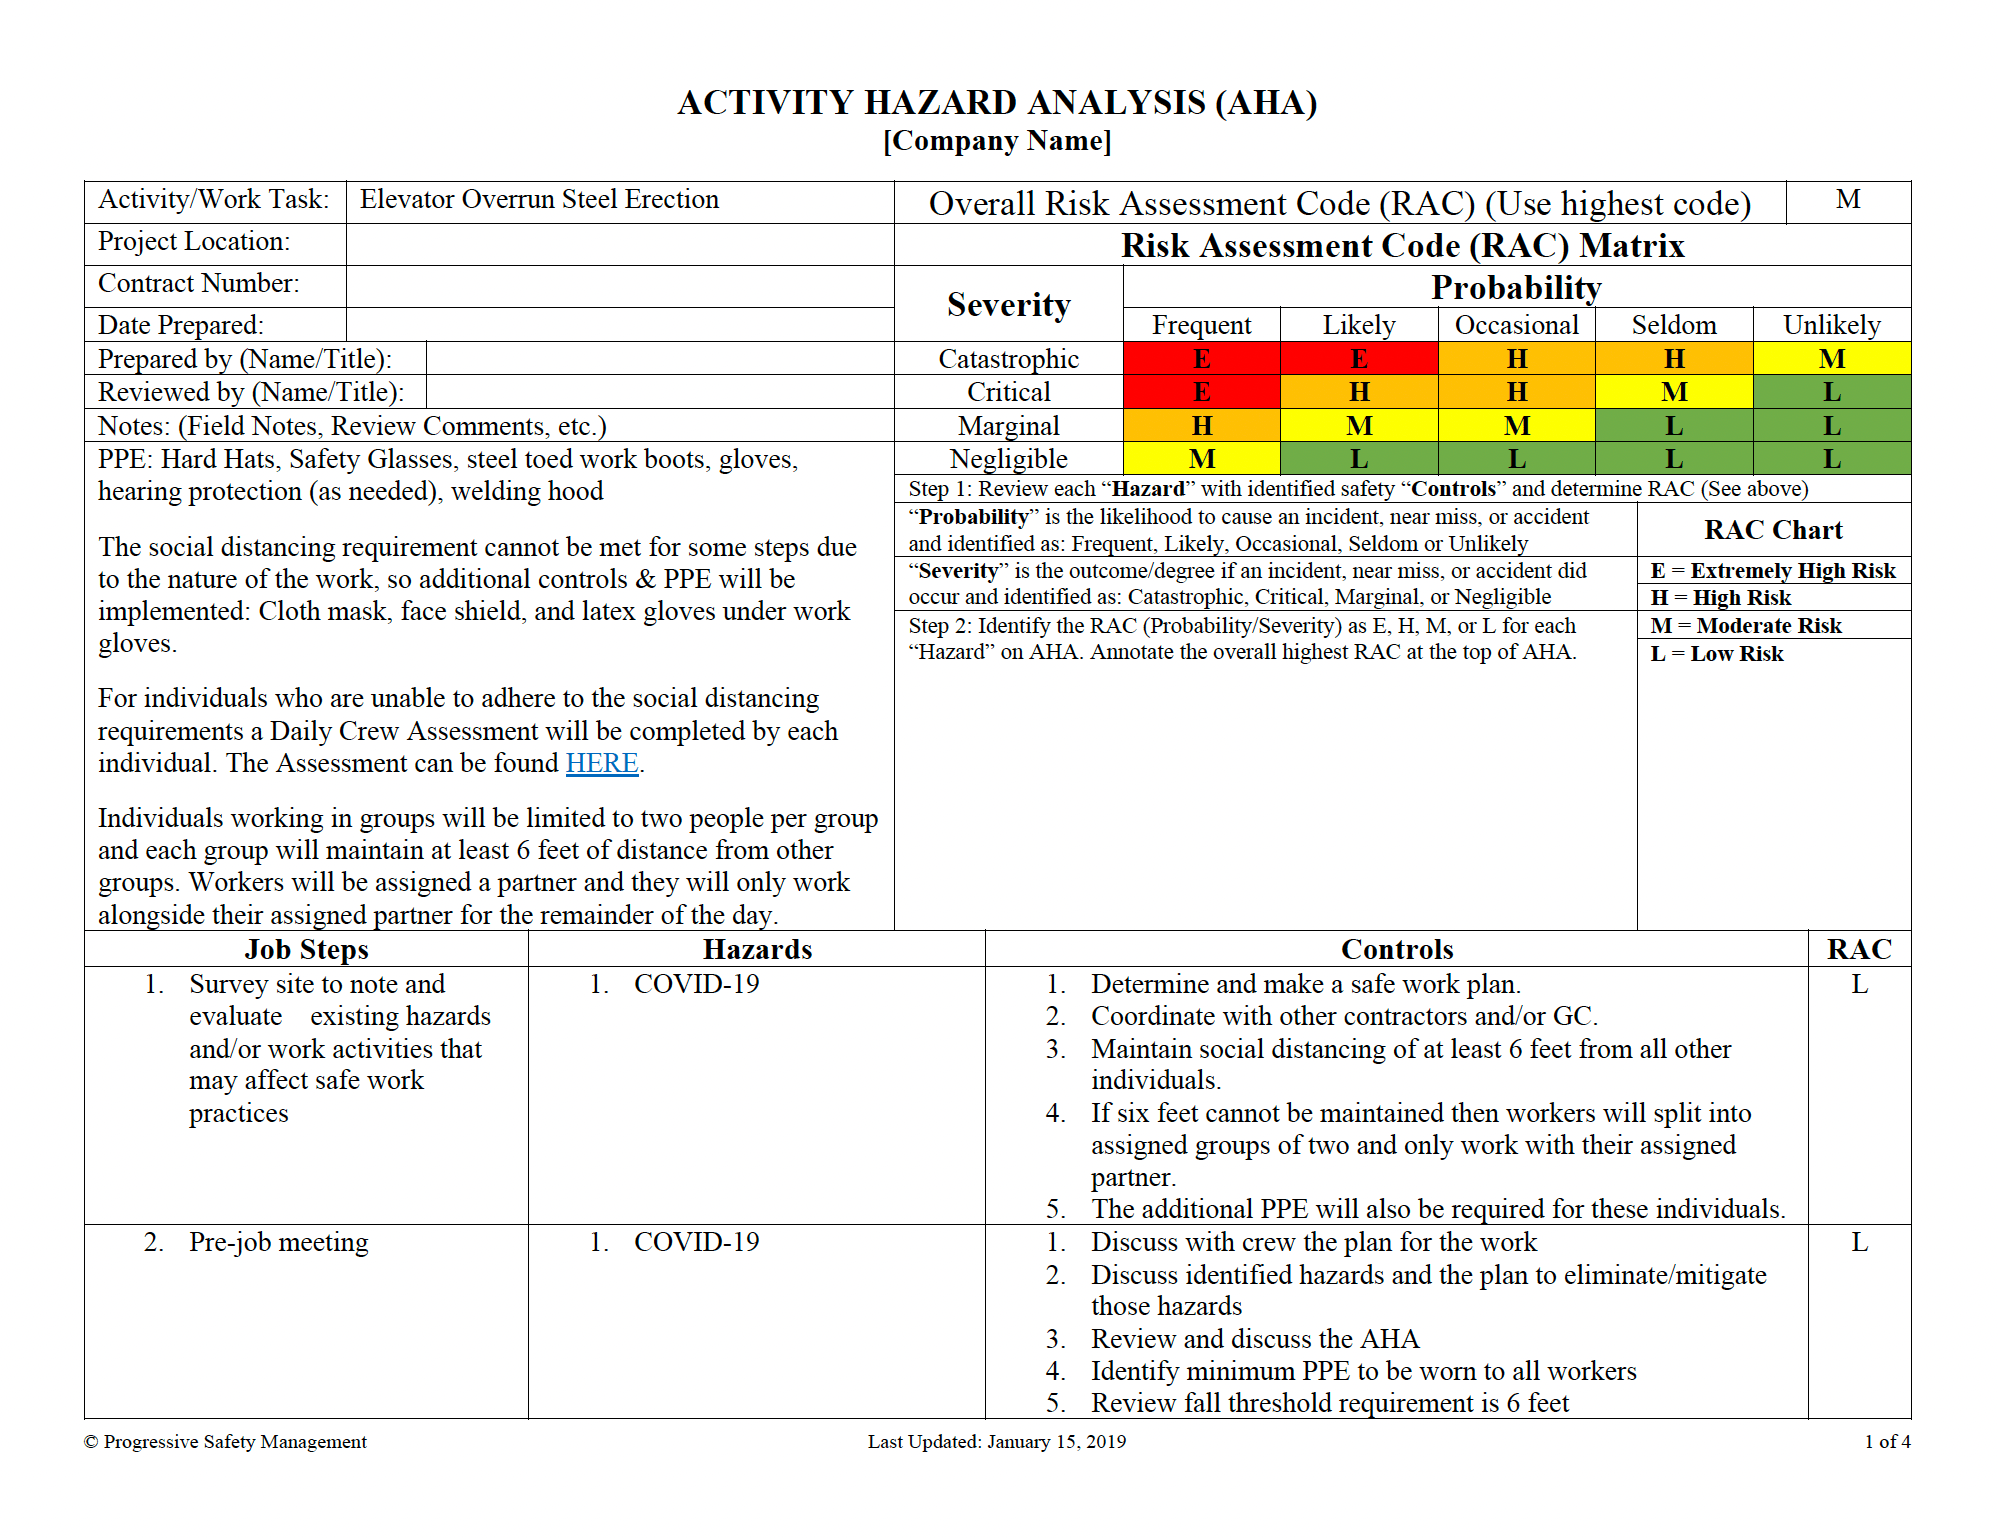 Activity Hazard Analysis (AHA) - Example 03